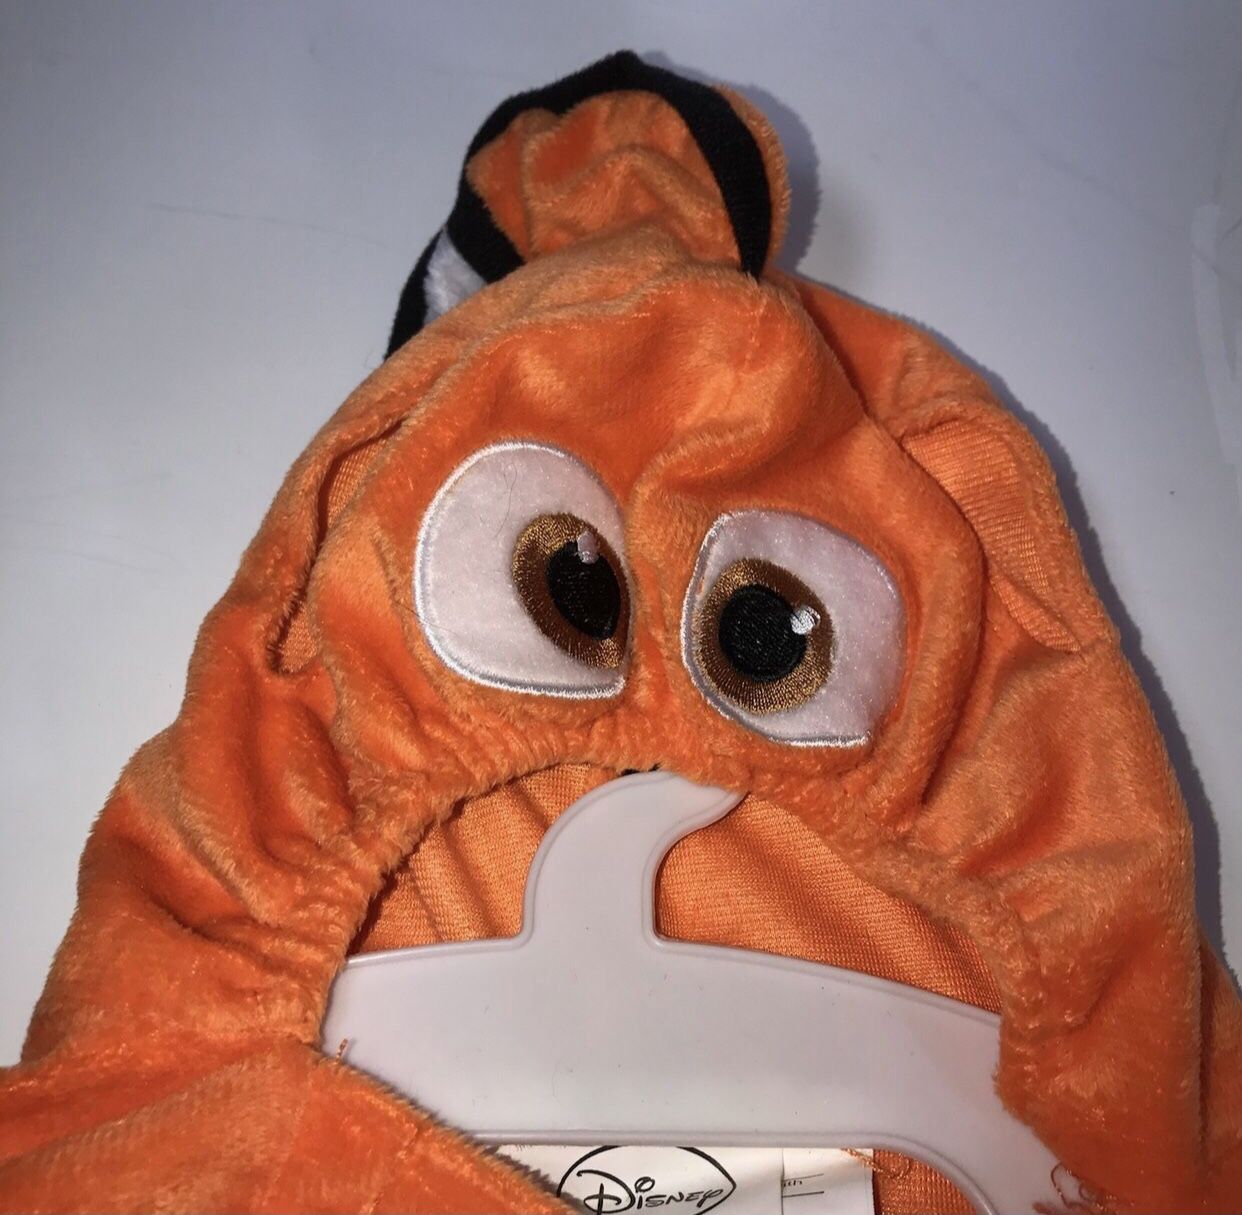 Brand New w/ Tags Disney Finding Nemo Dog / Pet Costume, Size Large, Adorable!! (PLEASE READ DESCRIPTION!)